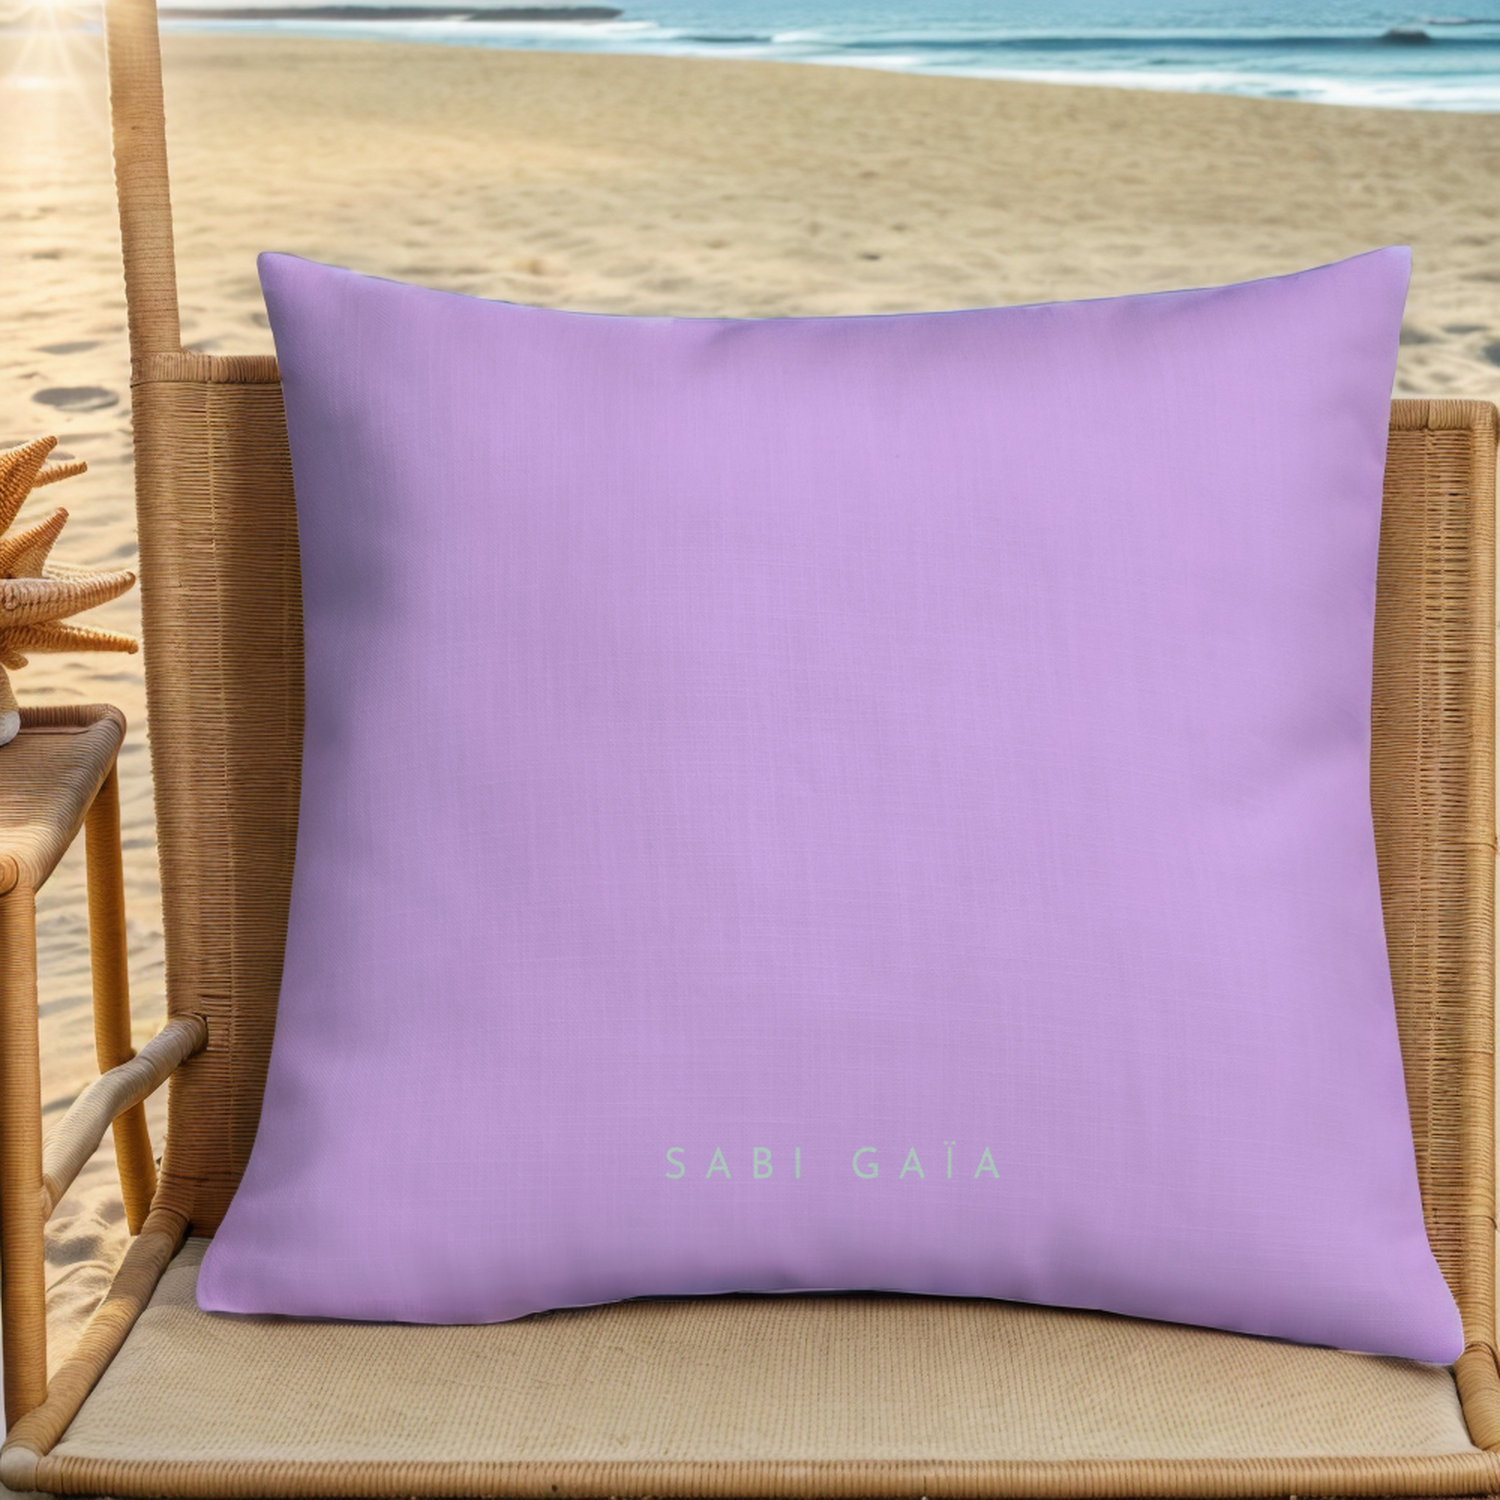 Premium Beach Pillow in Mykonos Mint